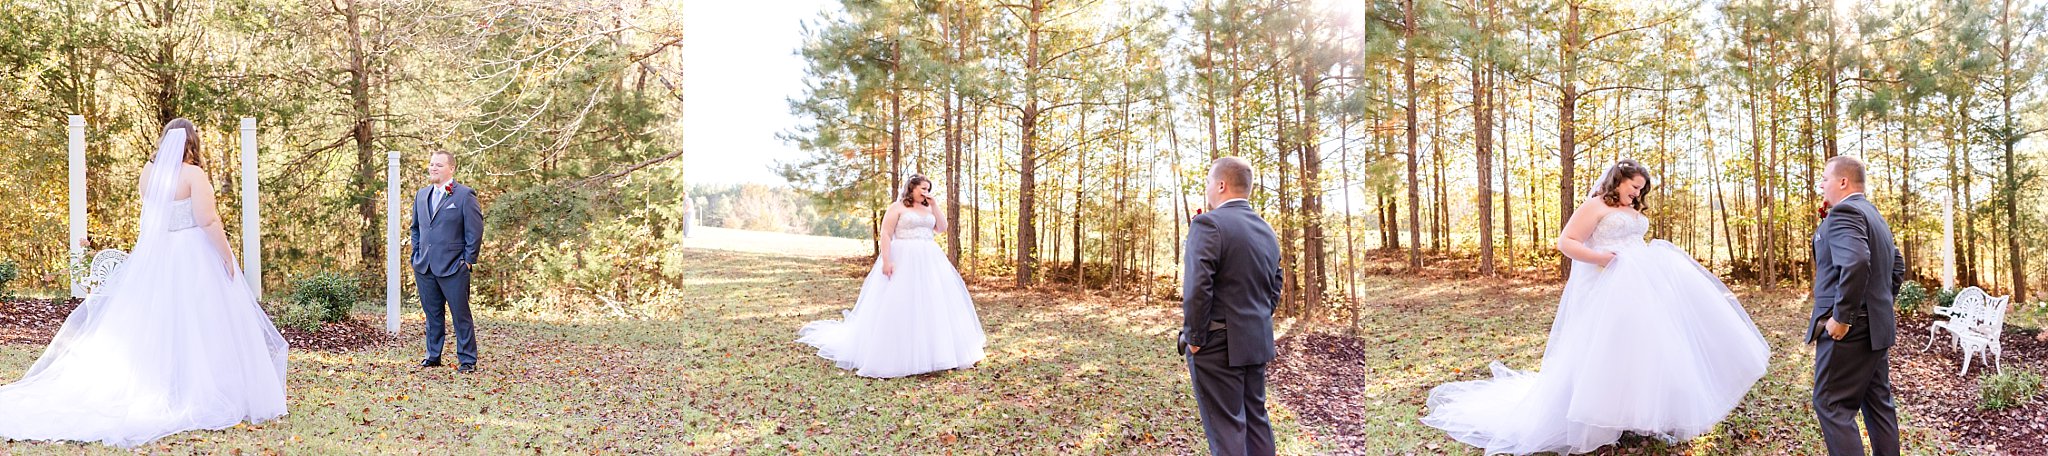 Wedding, Coach house, NC, Mount pleasant, november, wedding, photographer, details, bride